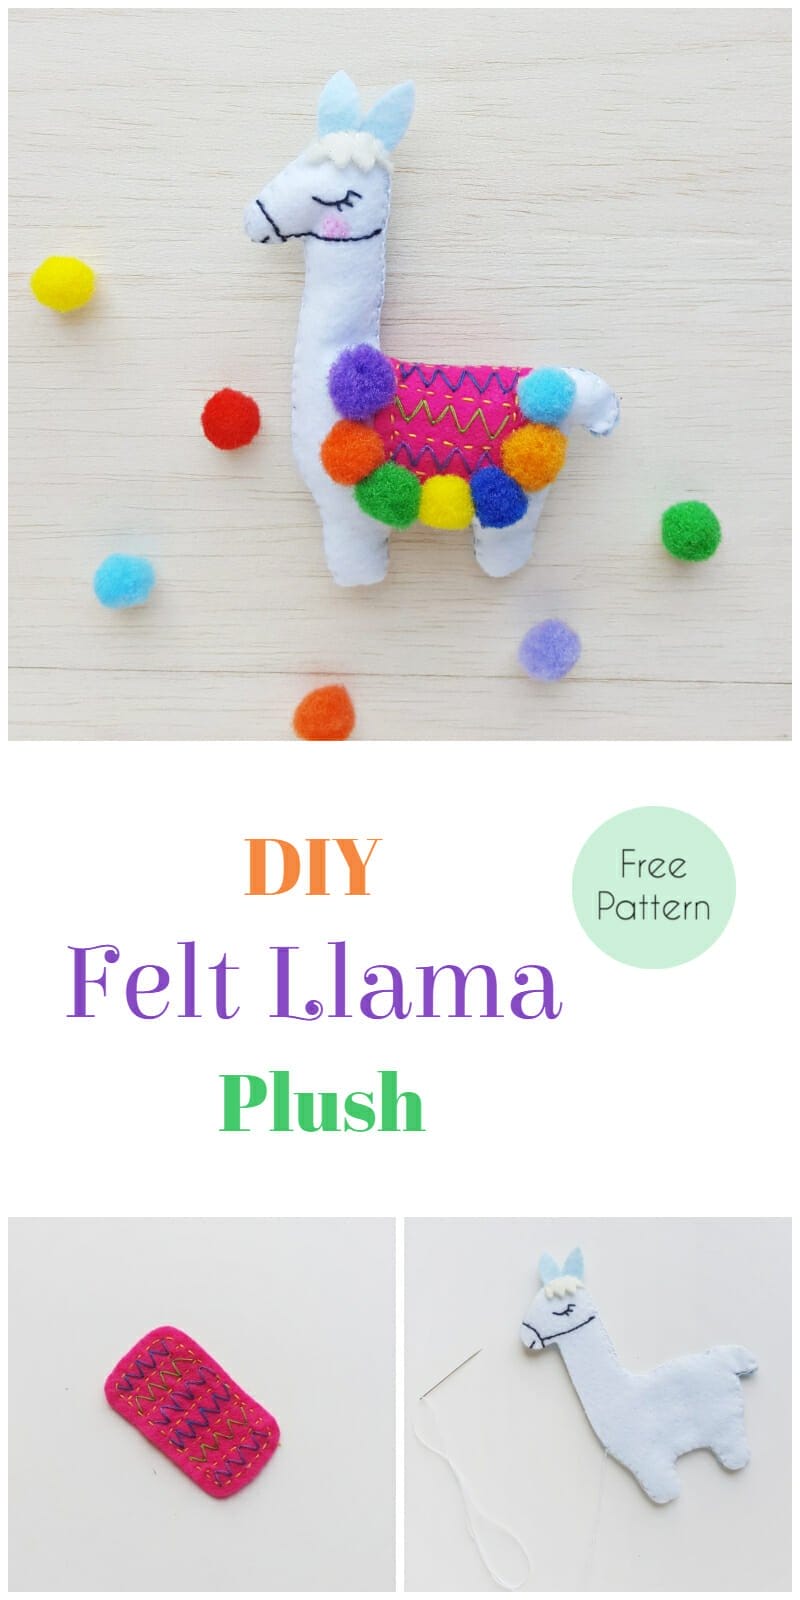 DIY Felt Llama Plush - Free Pattern